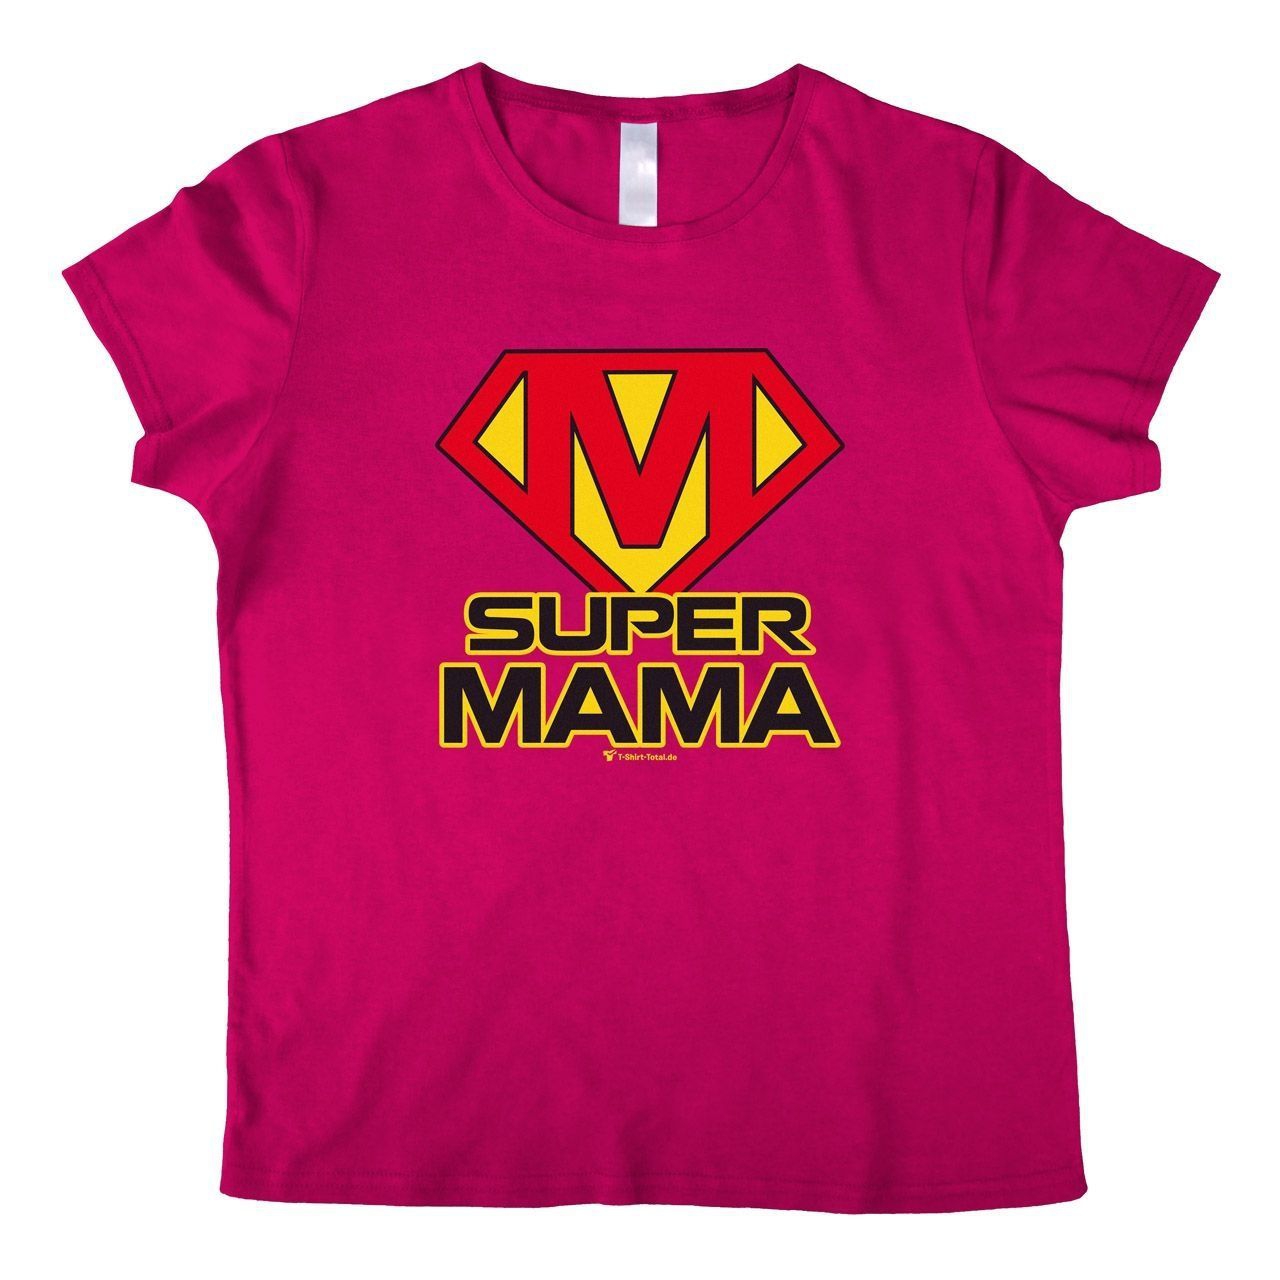 Super Mama Woman T-Shirt pink 2-Extra Large